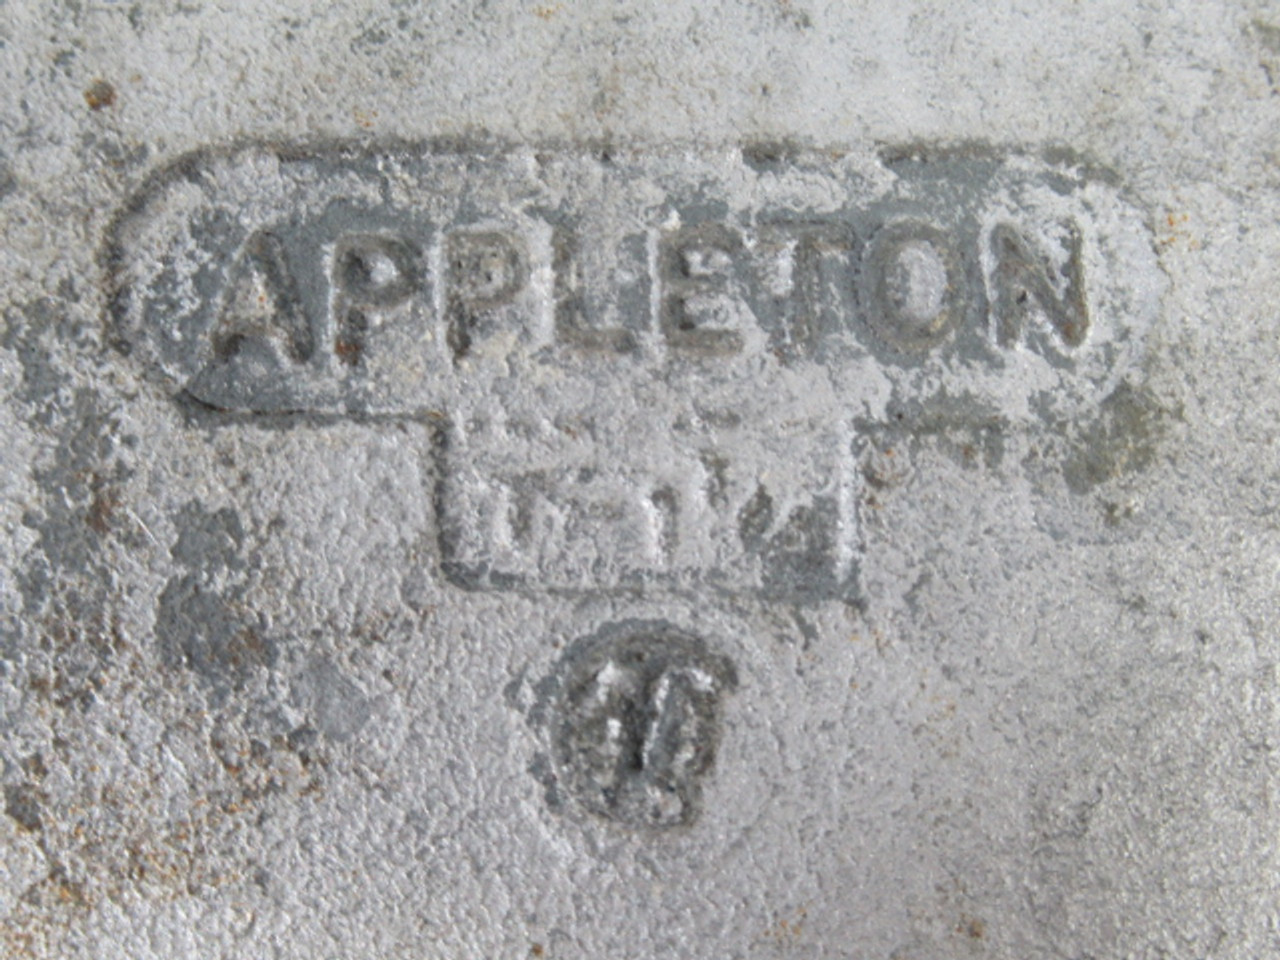 Appleton T-1-1/4 Conduit Body w/o Cover 1-1/4" USED